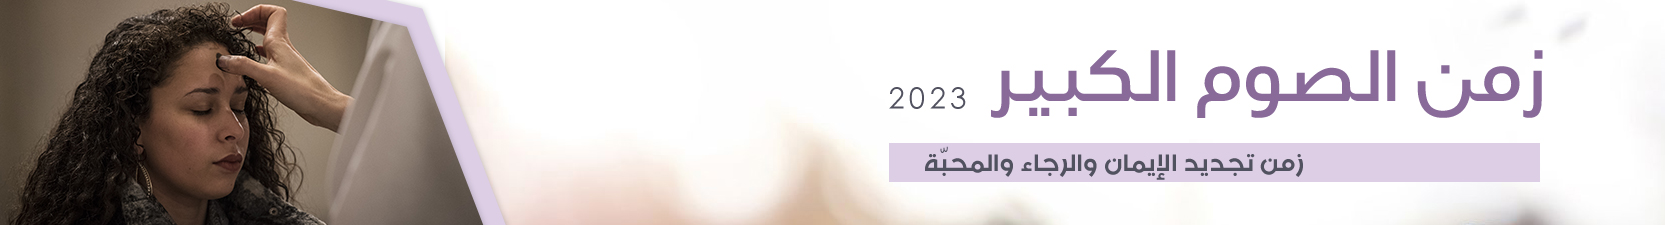 صوم 2023